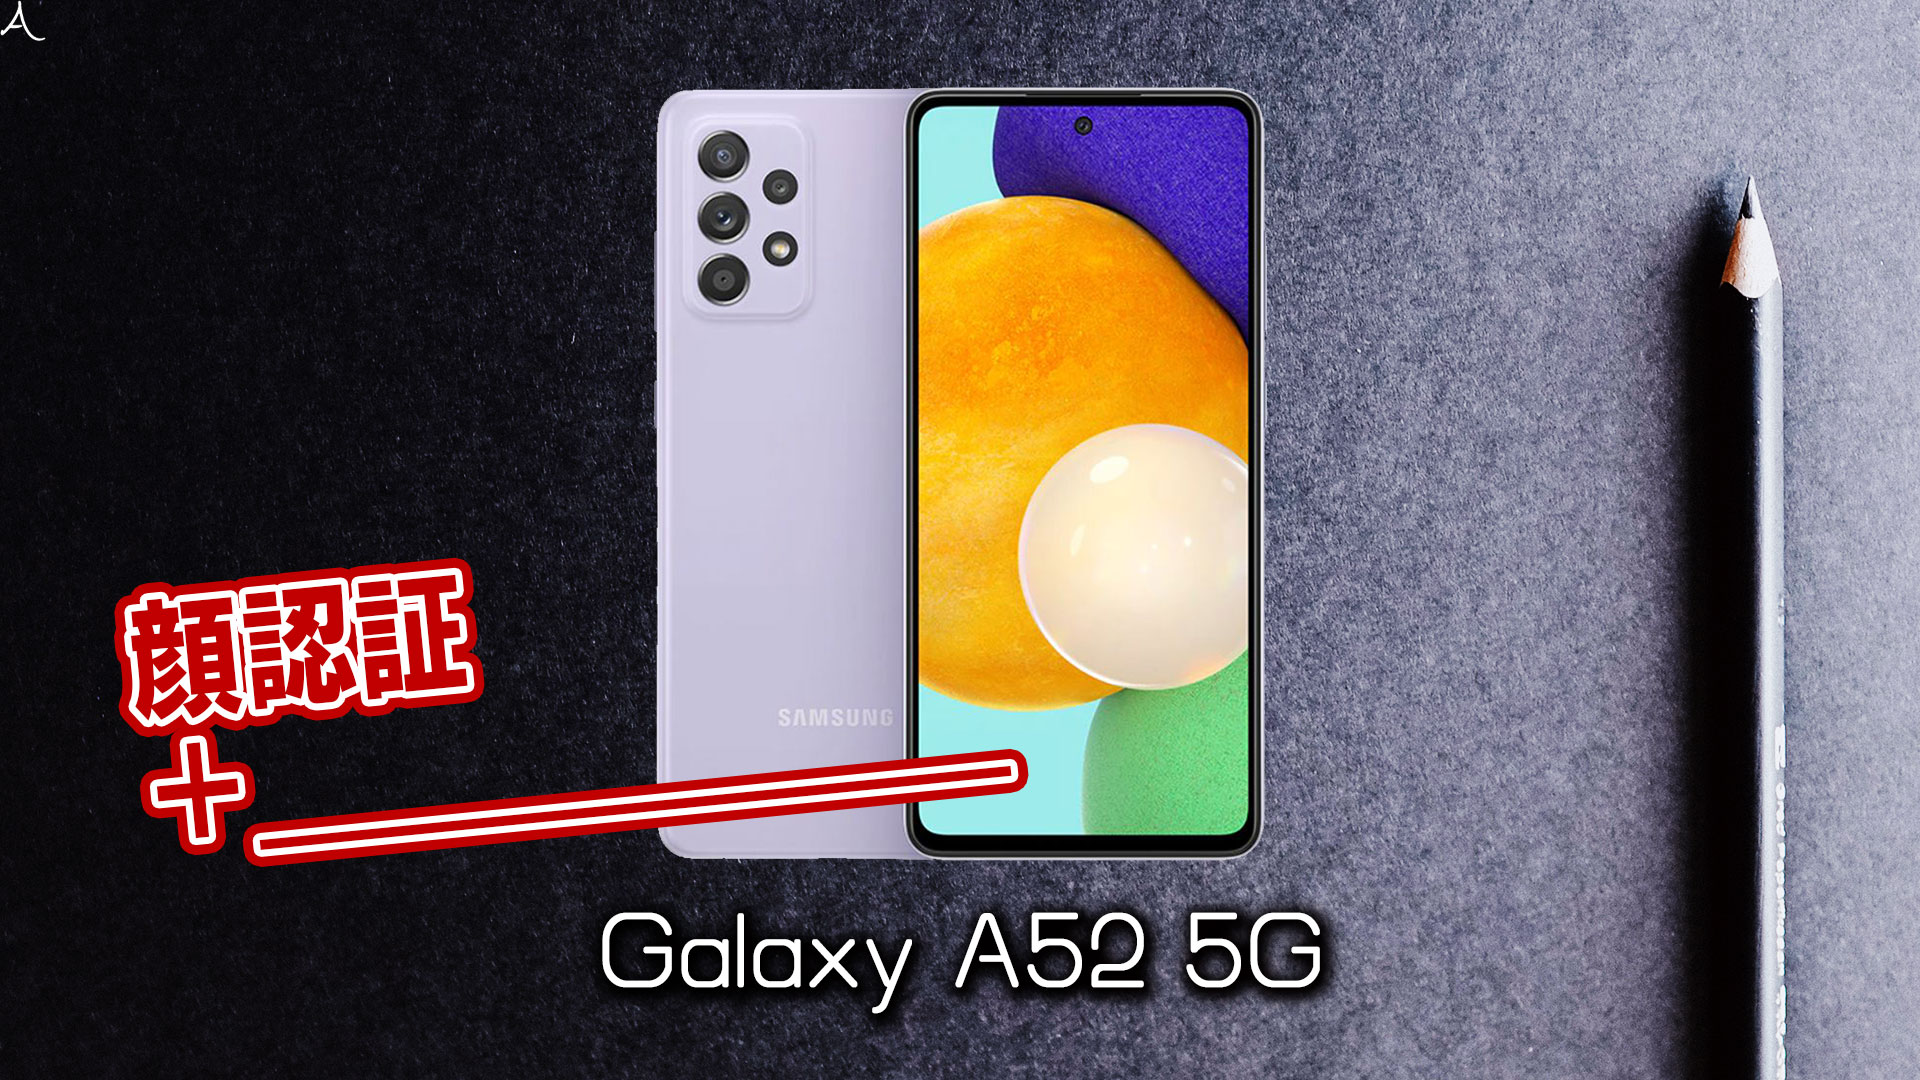 「Galaxy A52 5G」で使える2つの生体認証機能とその特徴を解説：虹彩認証はある？